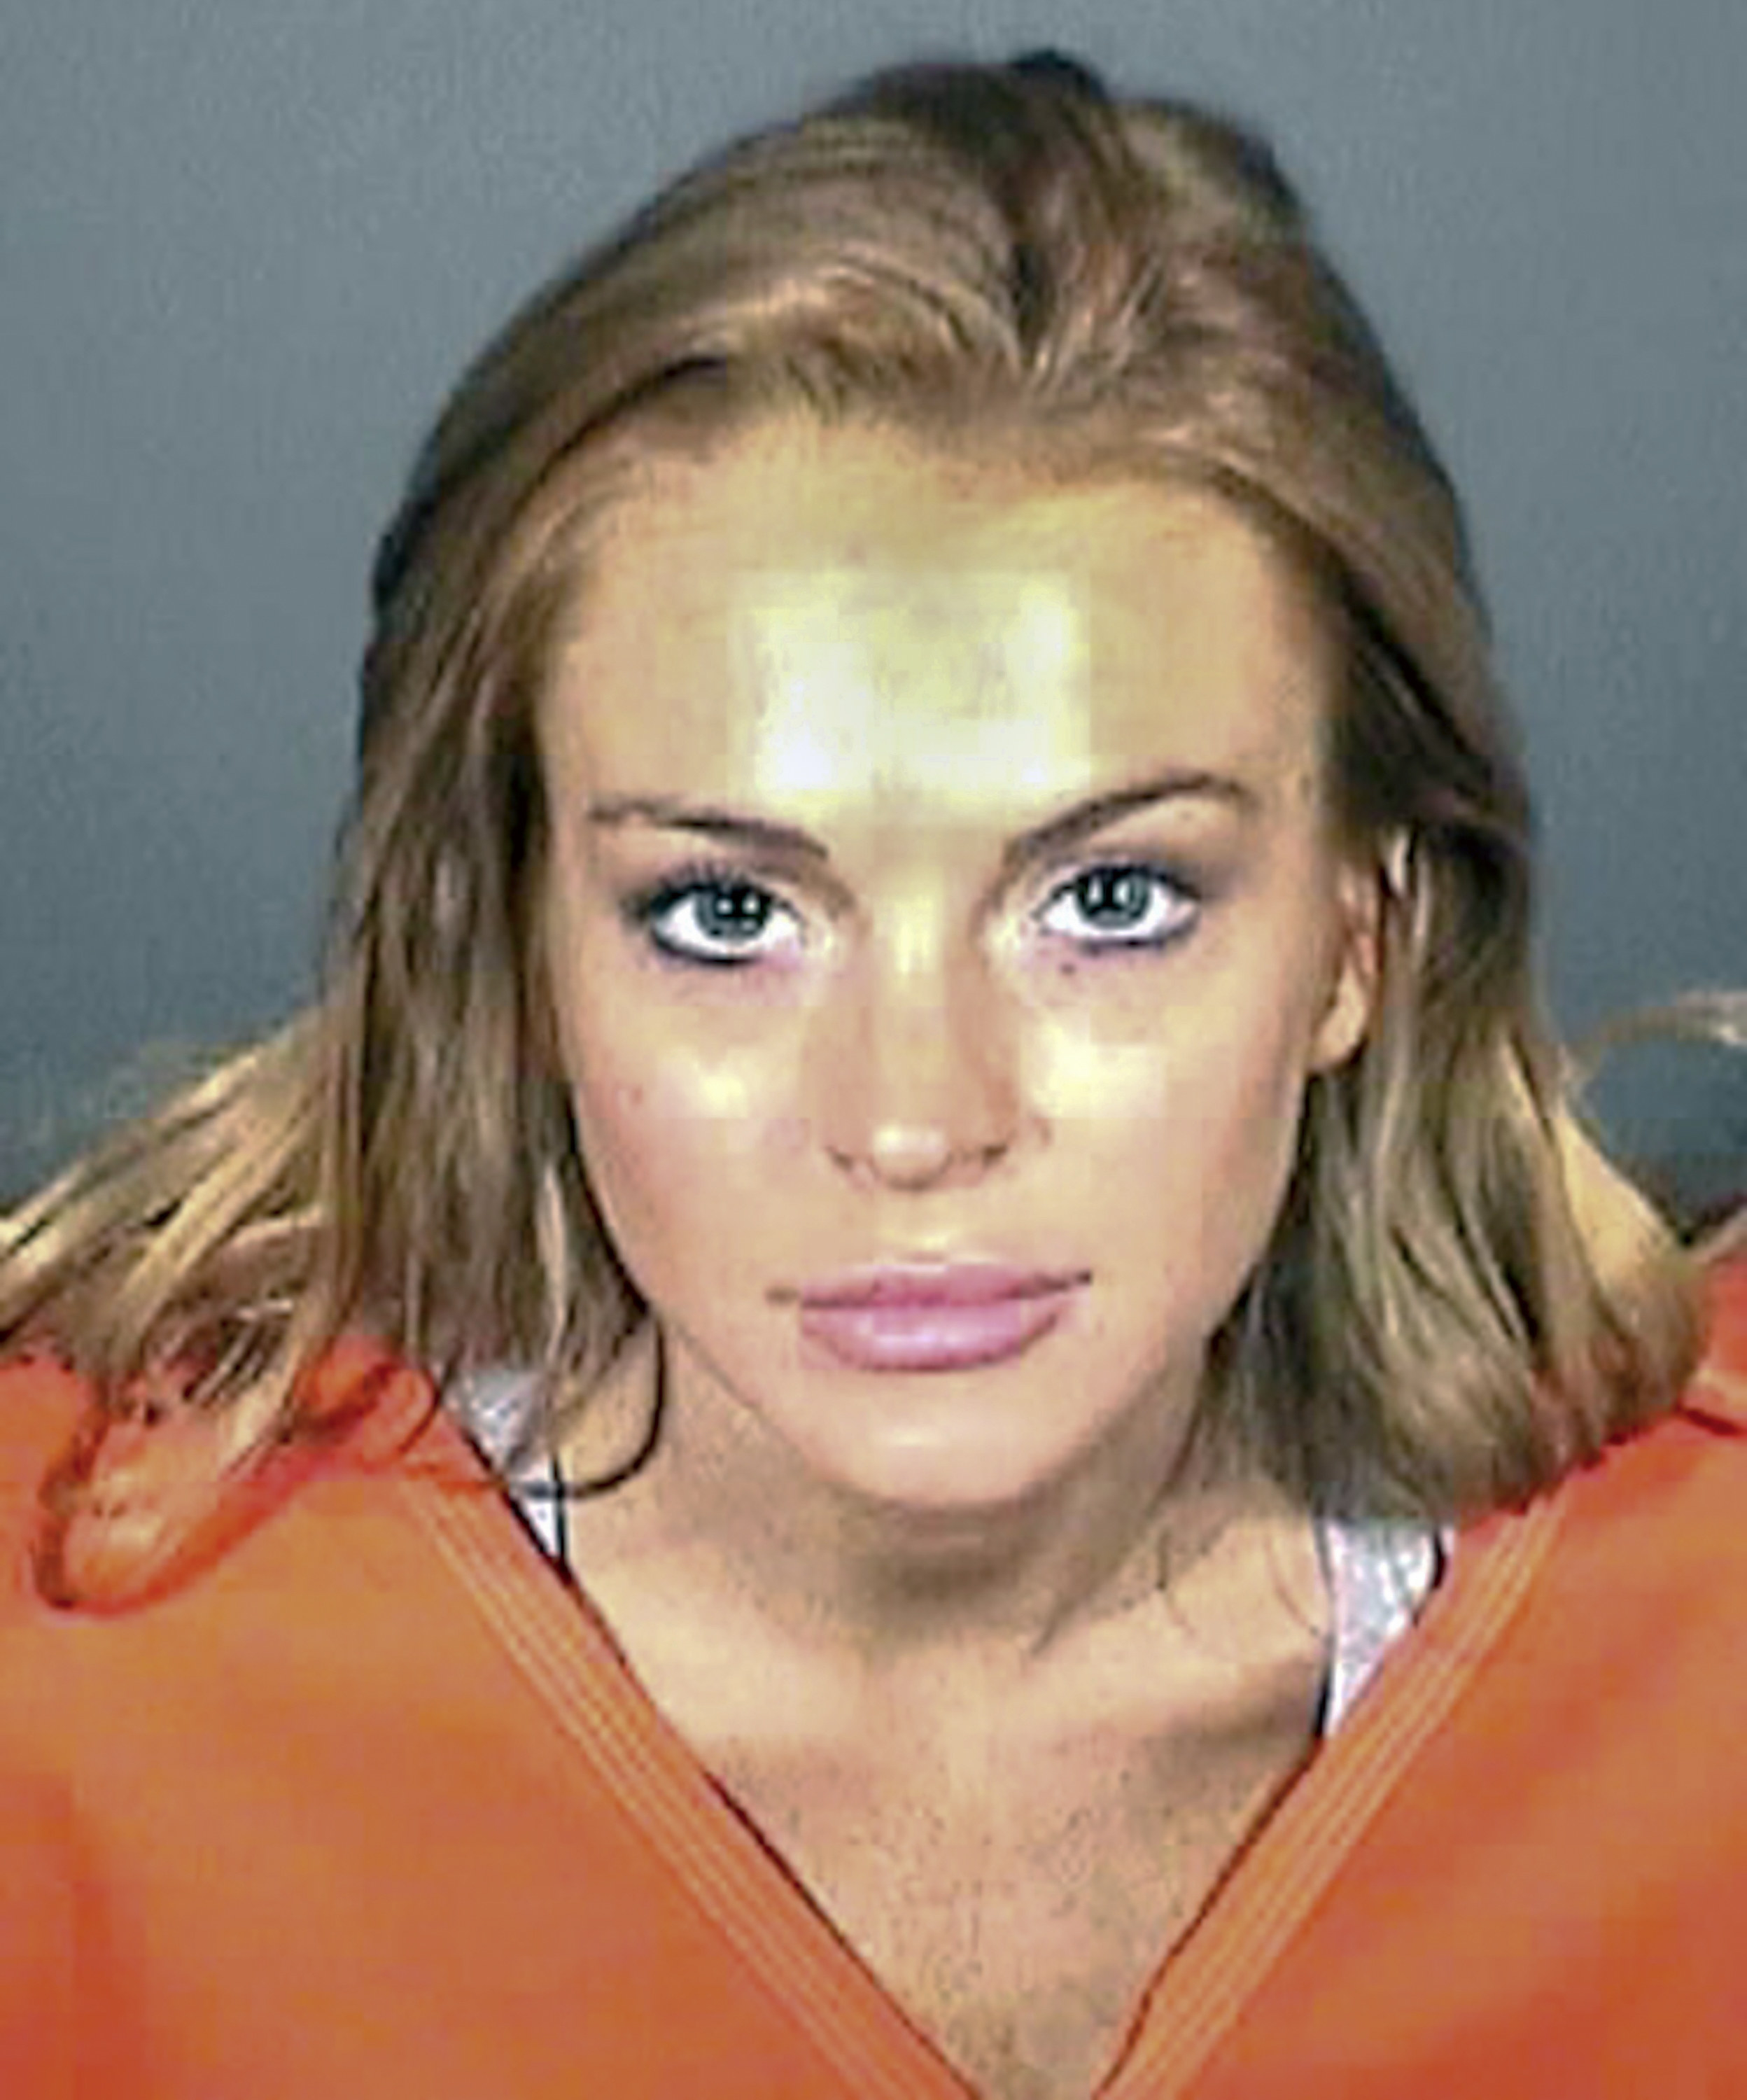 A mugshot of Lindsay Lohan